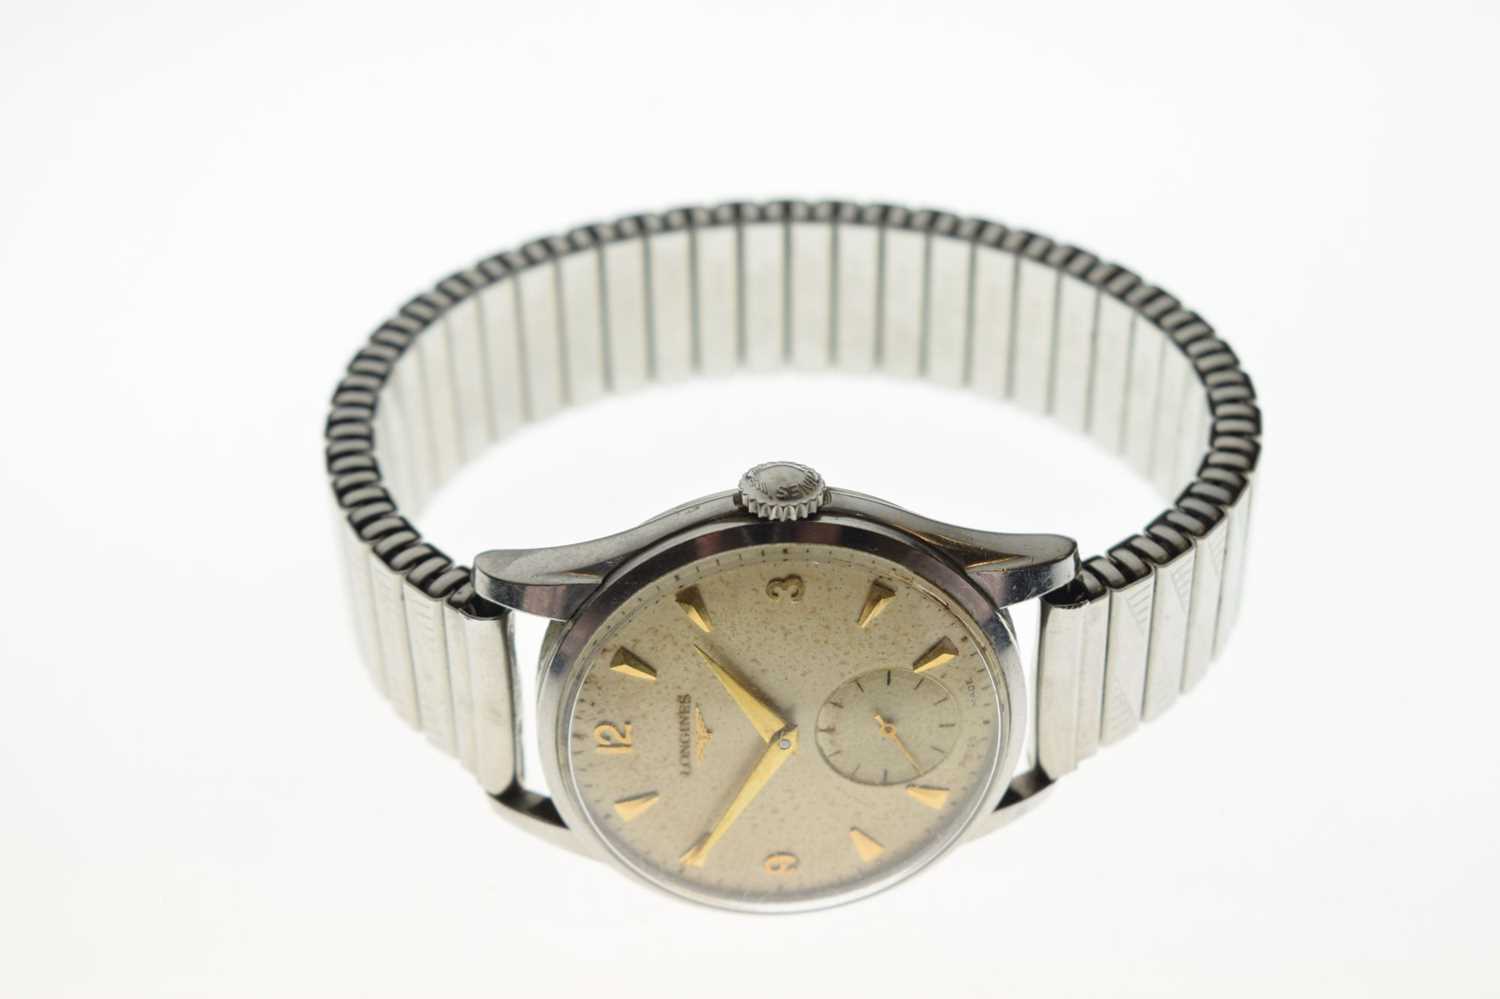 Longines - Gentleman's manual wind wristwatch - Image 4 of 7